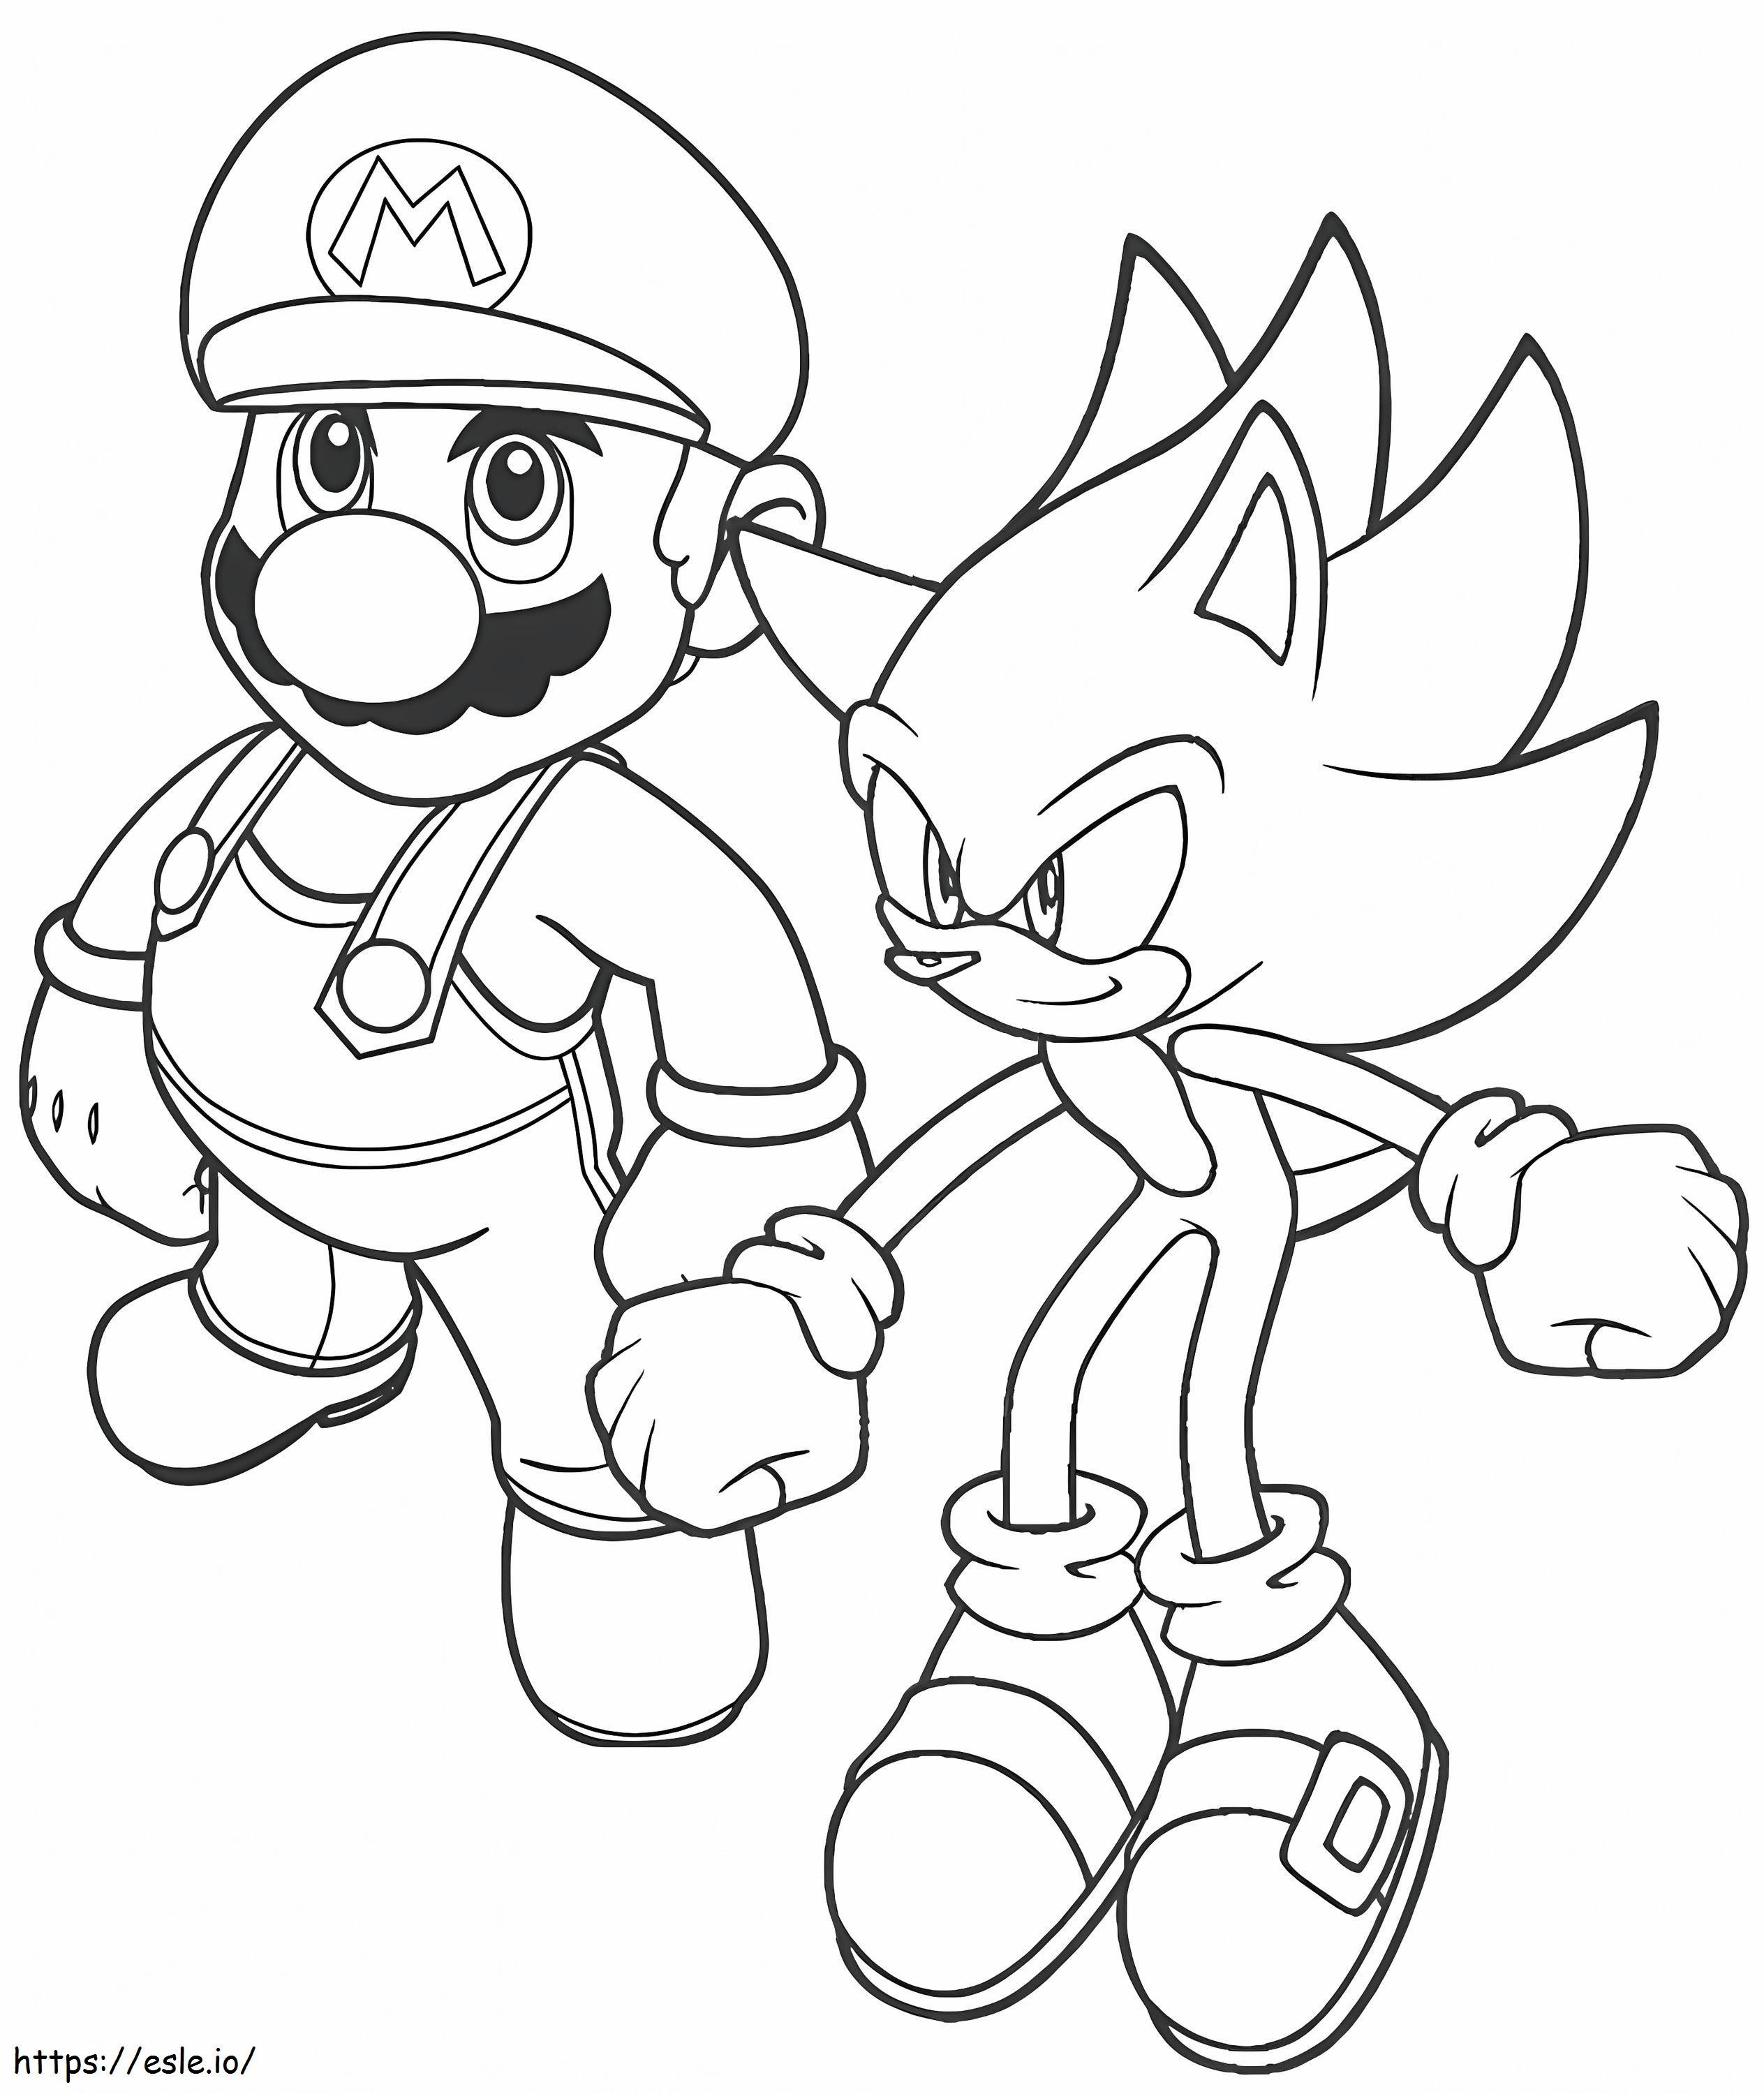 Coloriage  Mario et Sonic à imprimer dessin